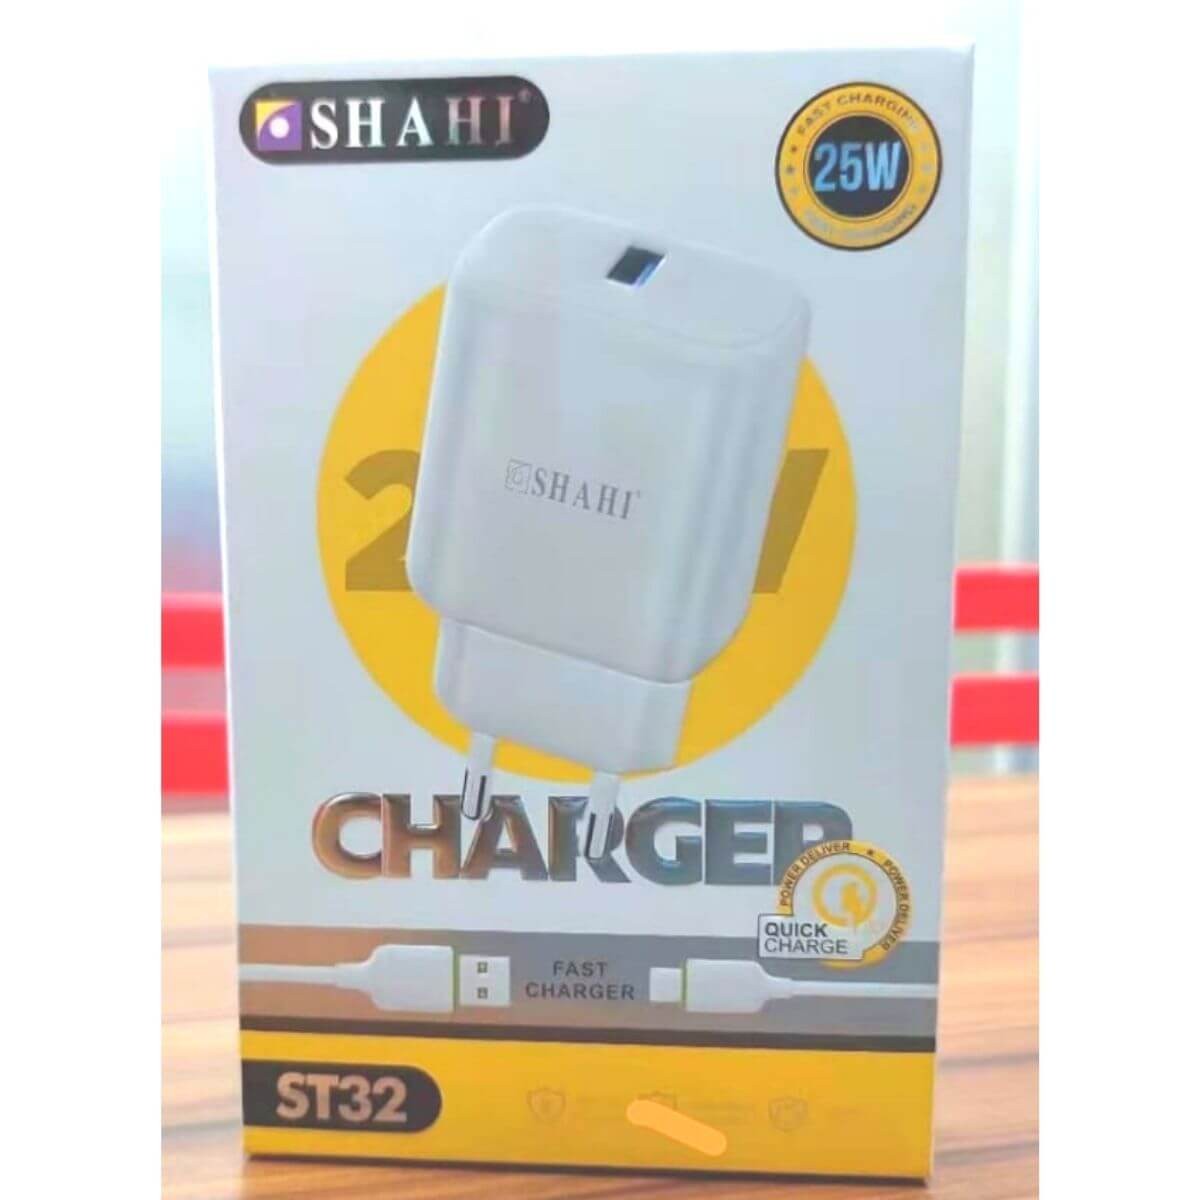 Shahi 25Watt ST32 Micro Fast Quick Charger BD